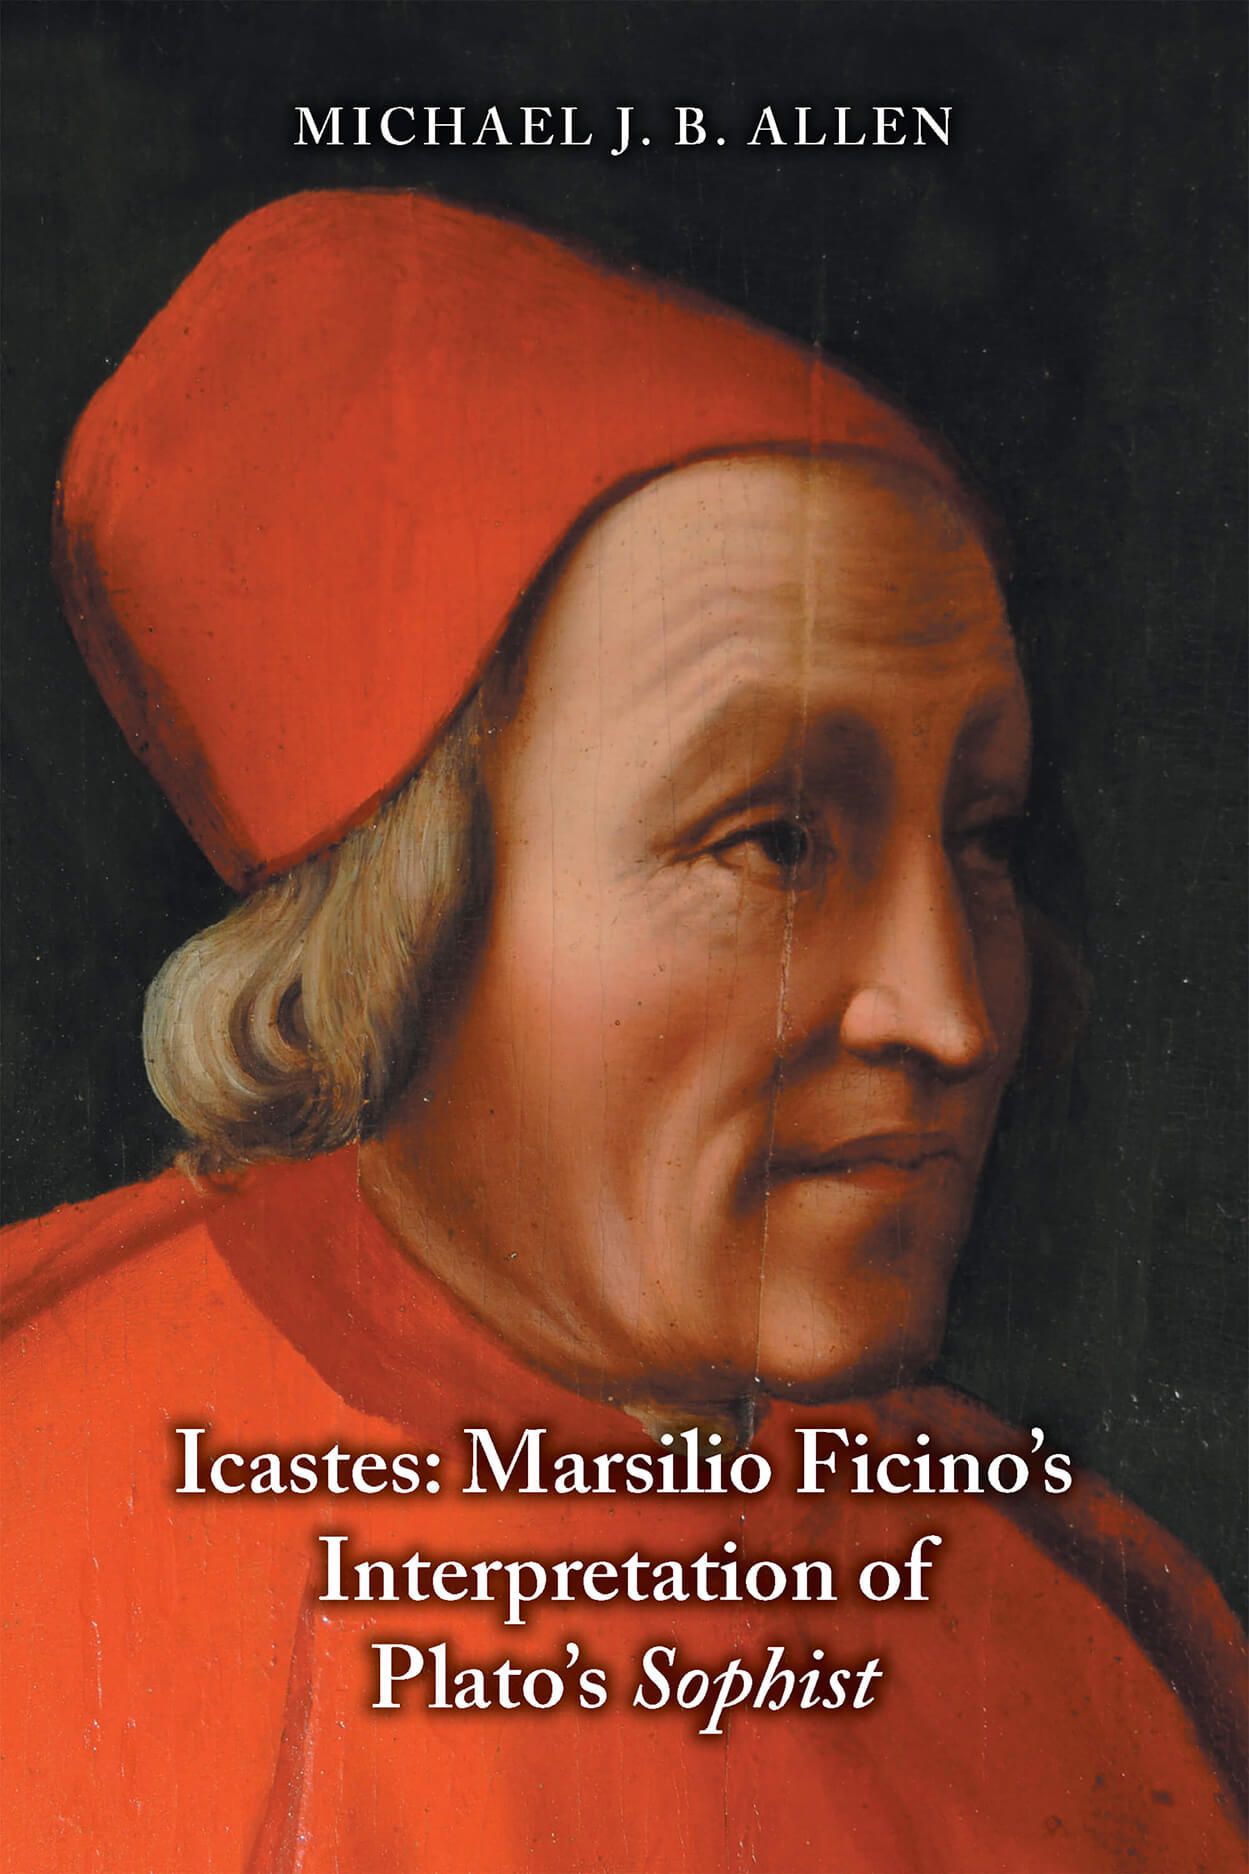 Icastes: Marsilio Ficino’s Interpretation of Plato’s Sophist